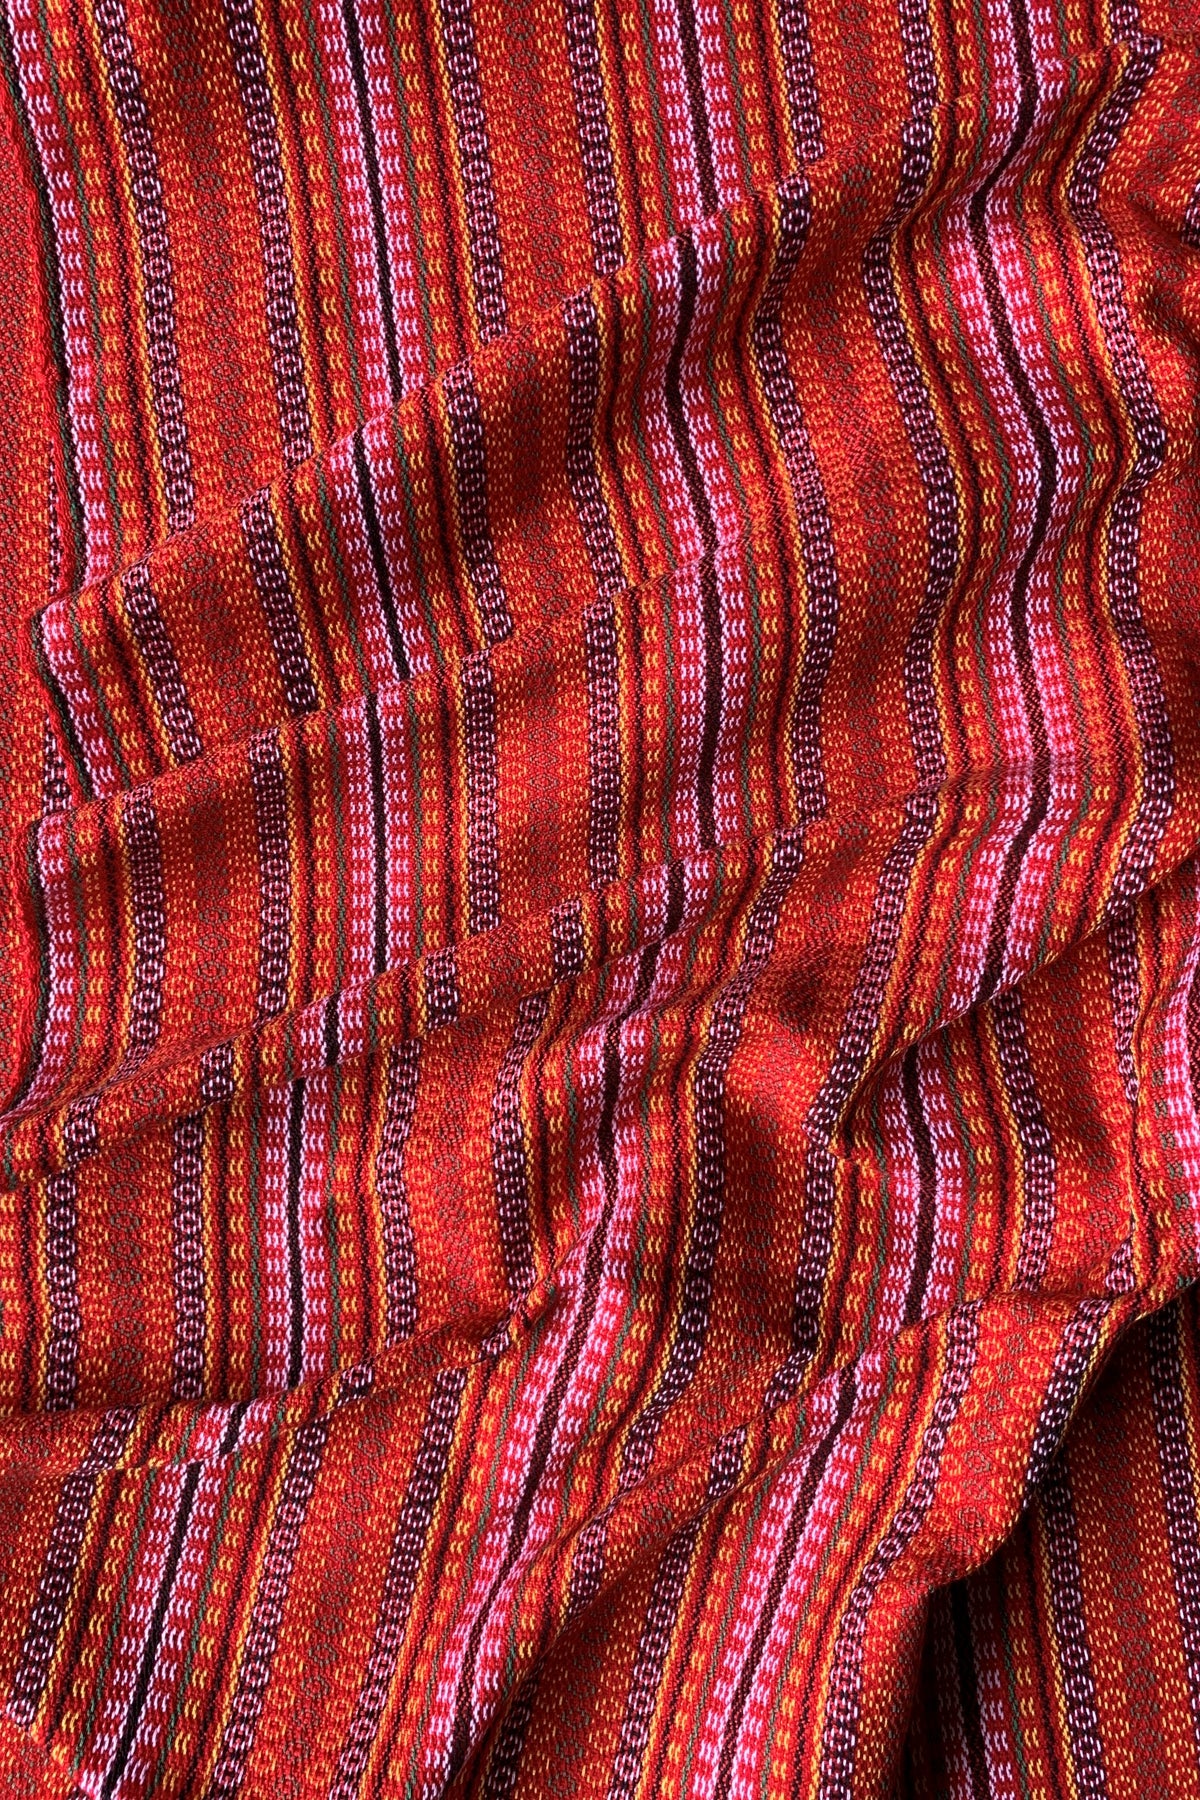 Indigenous Enabel Crafts – ANTHILLfabrics